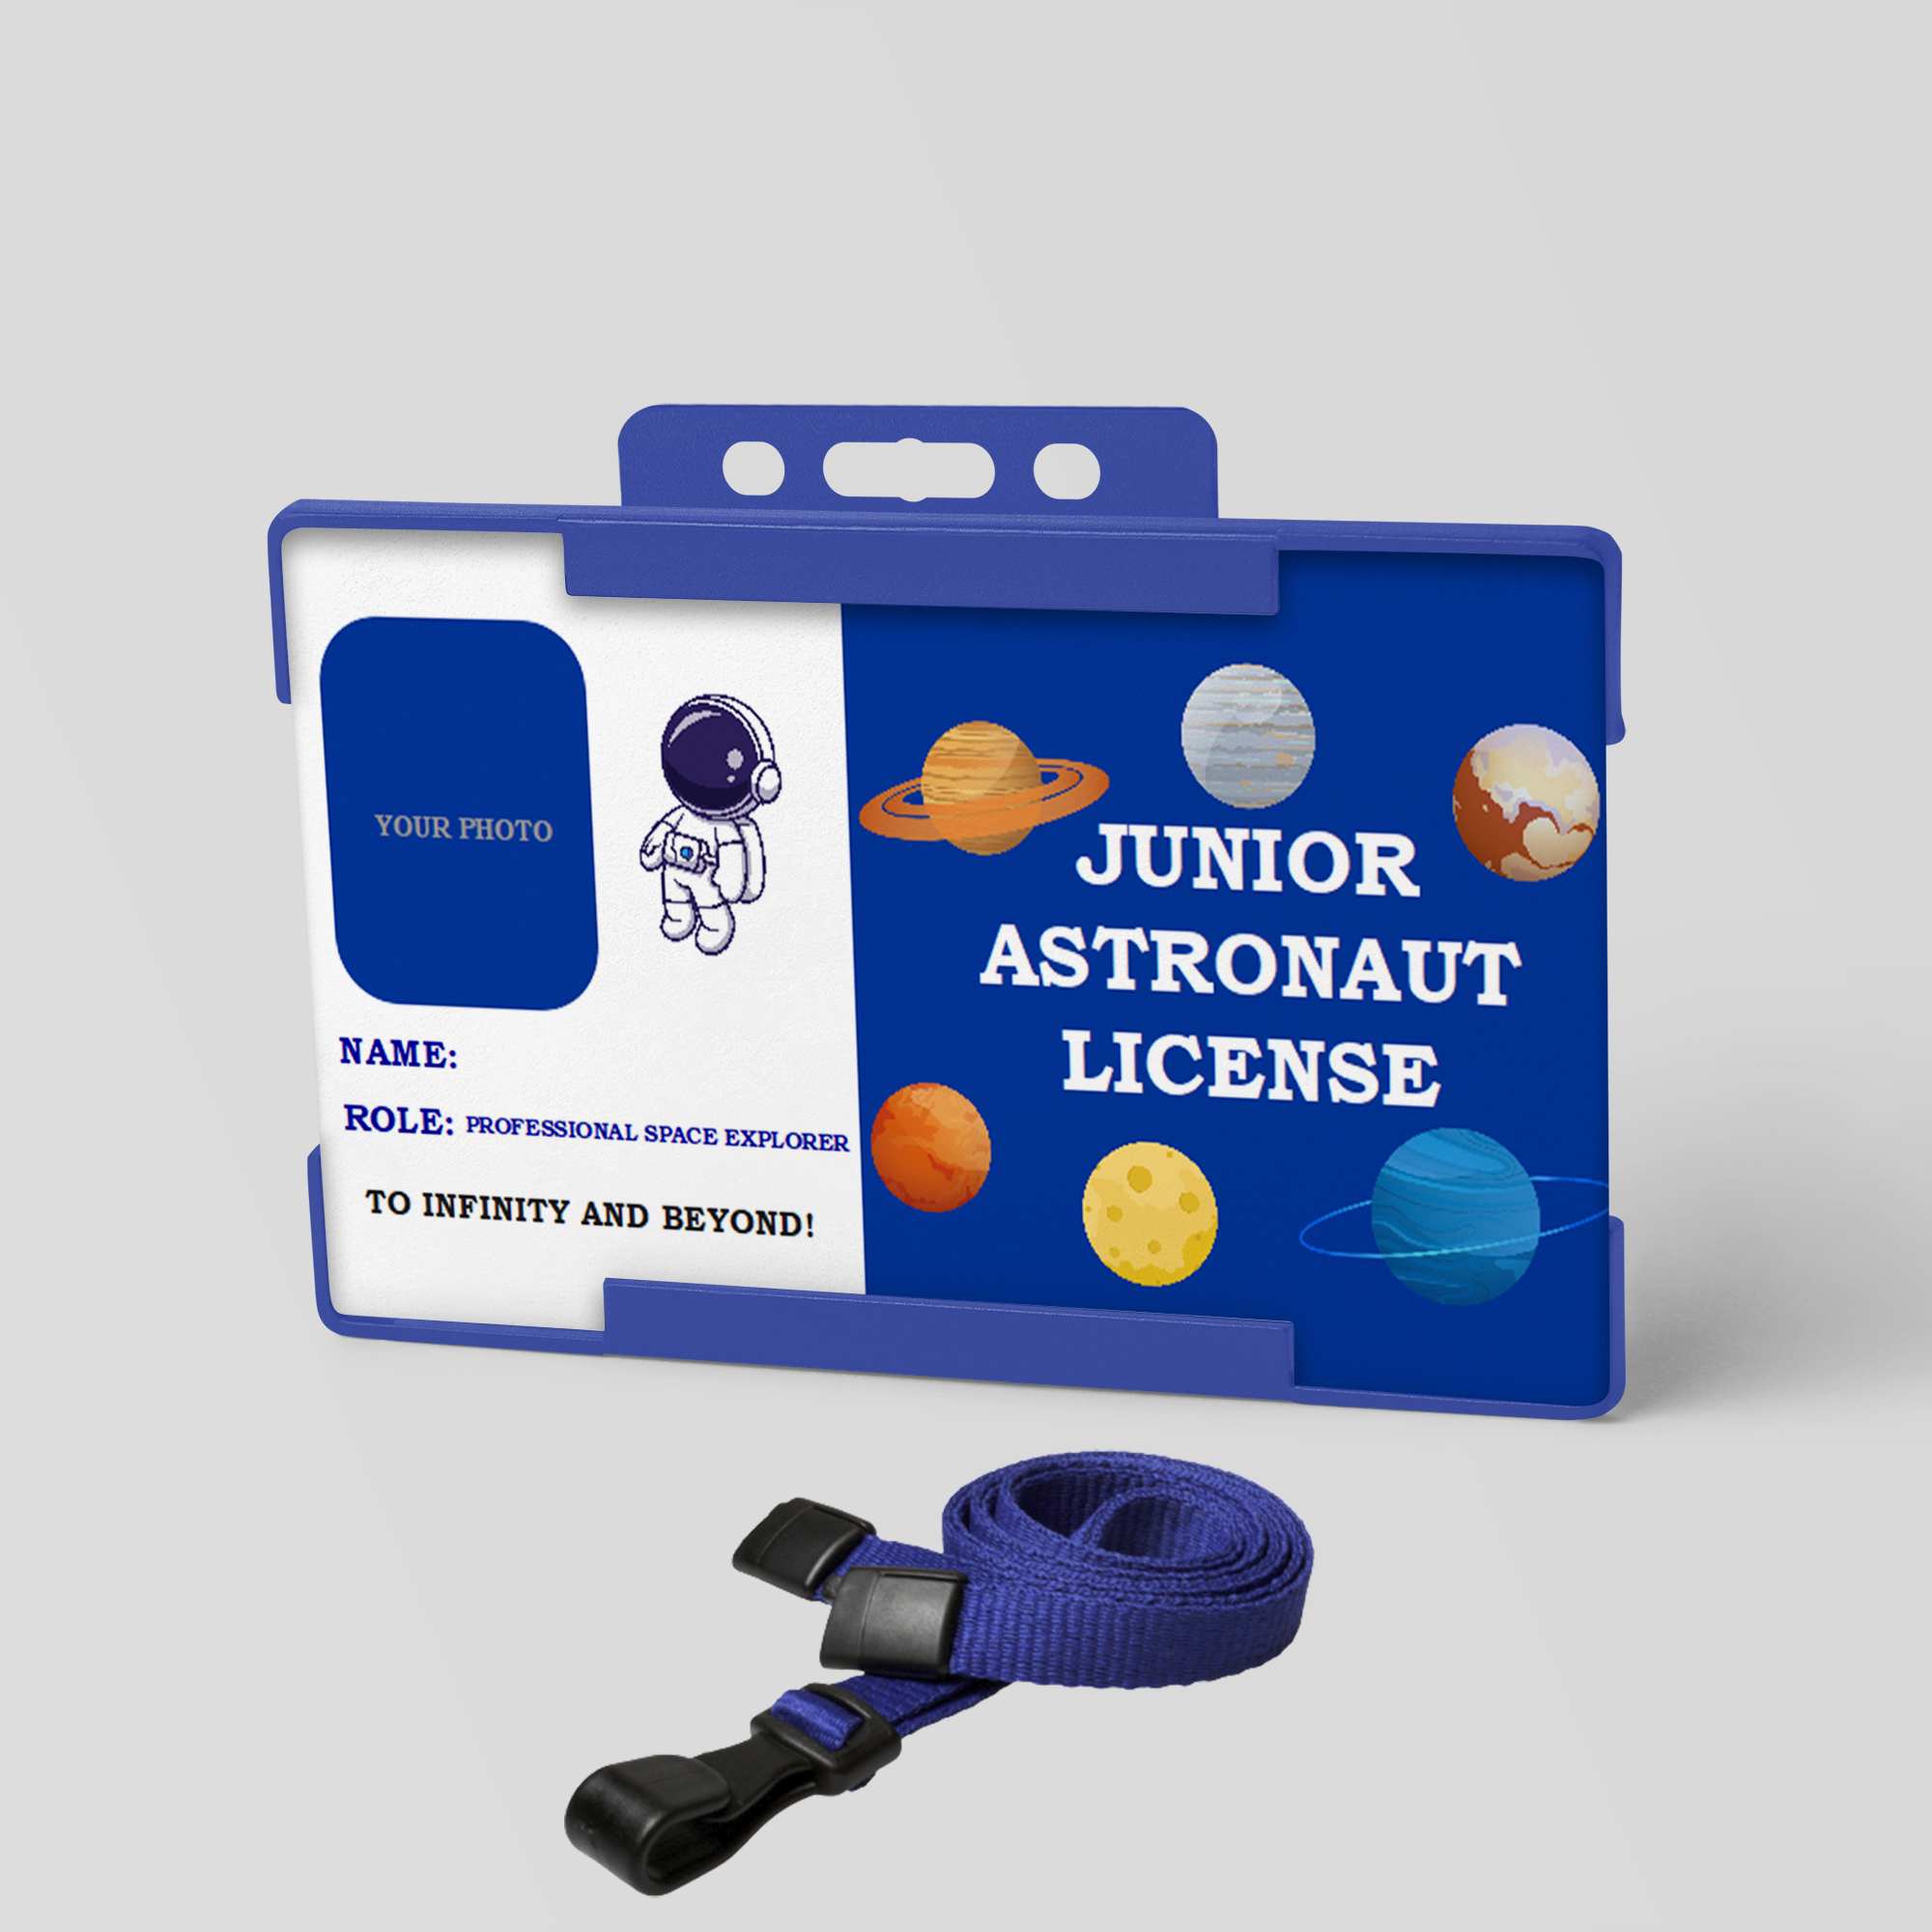 Astronaut License Novelty ID Card